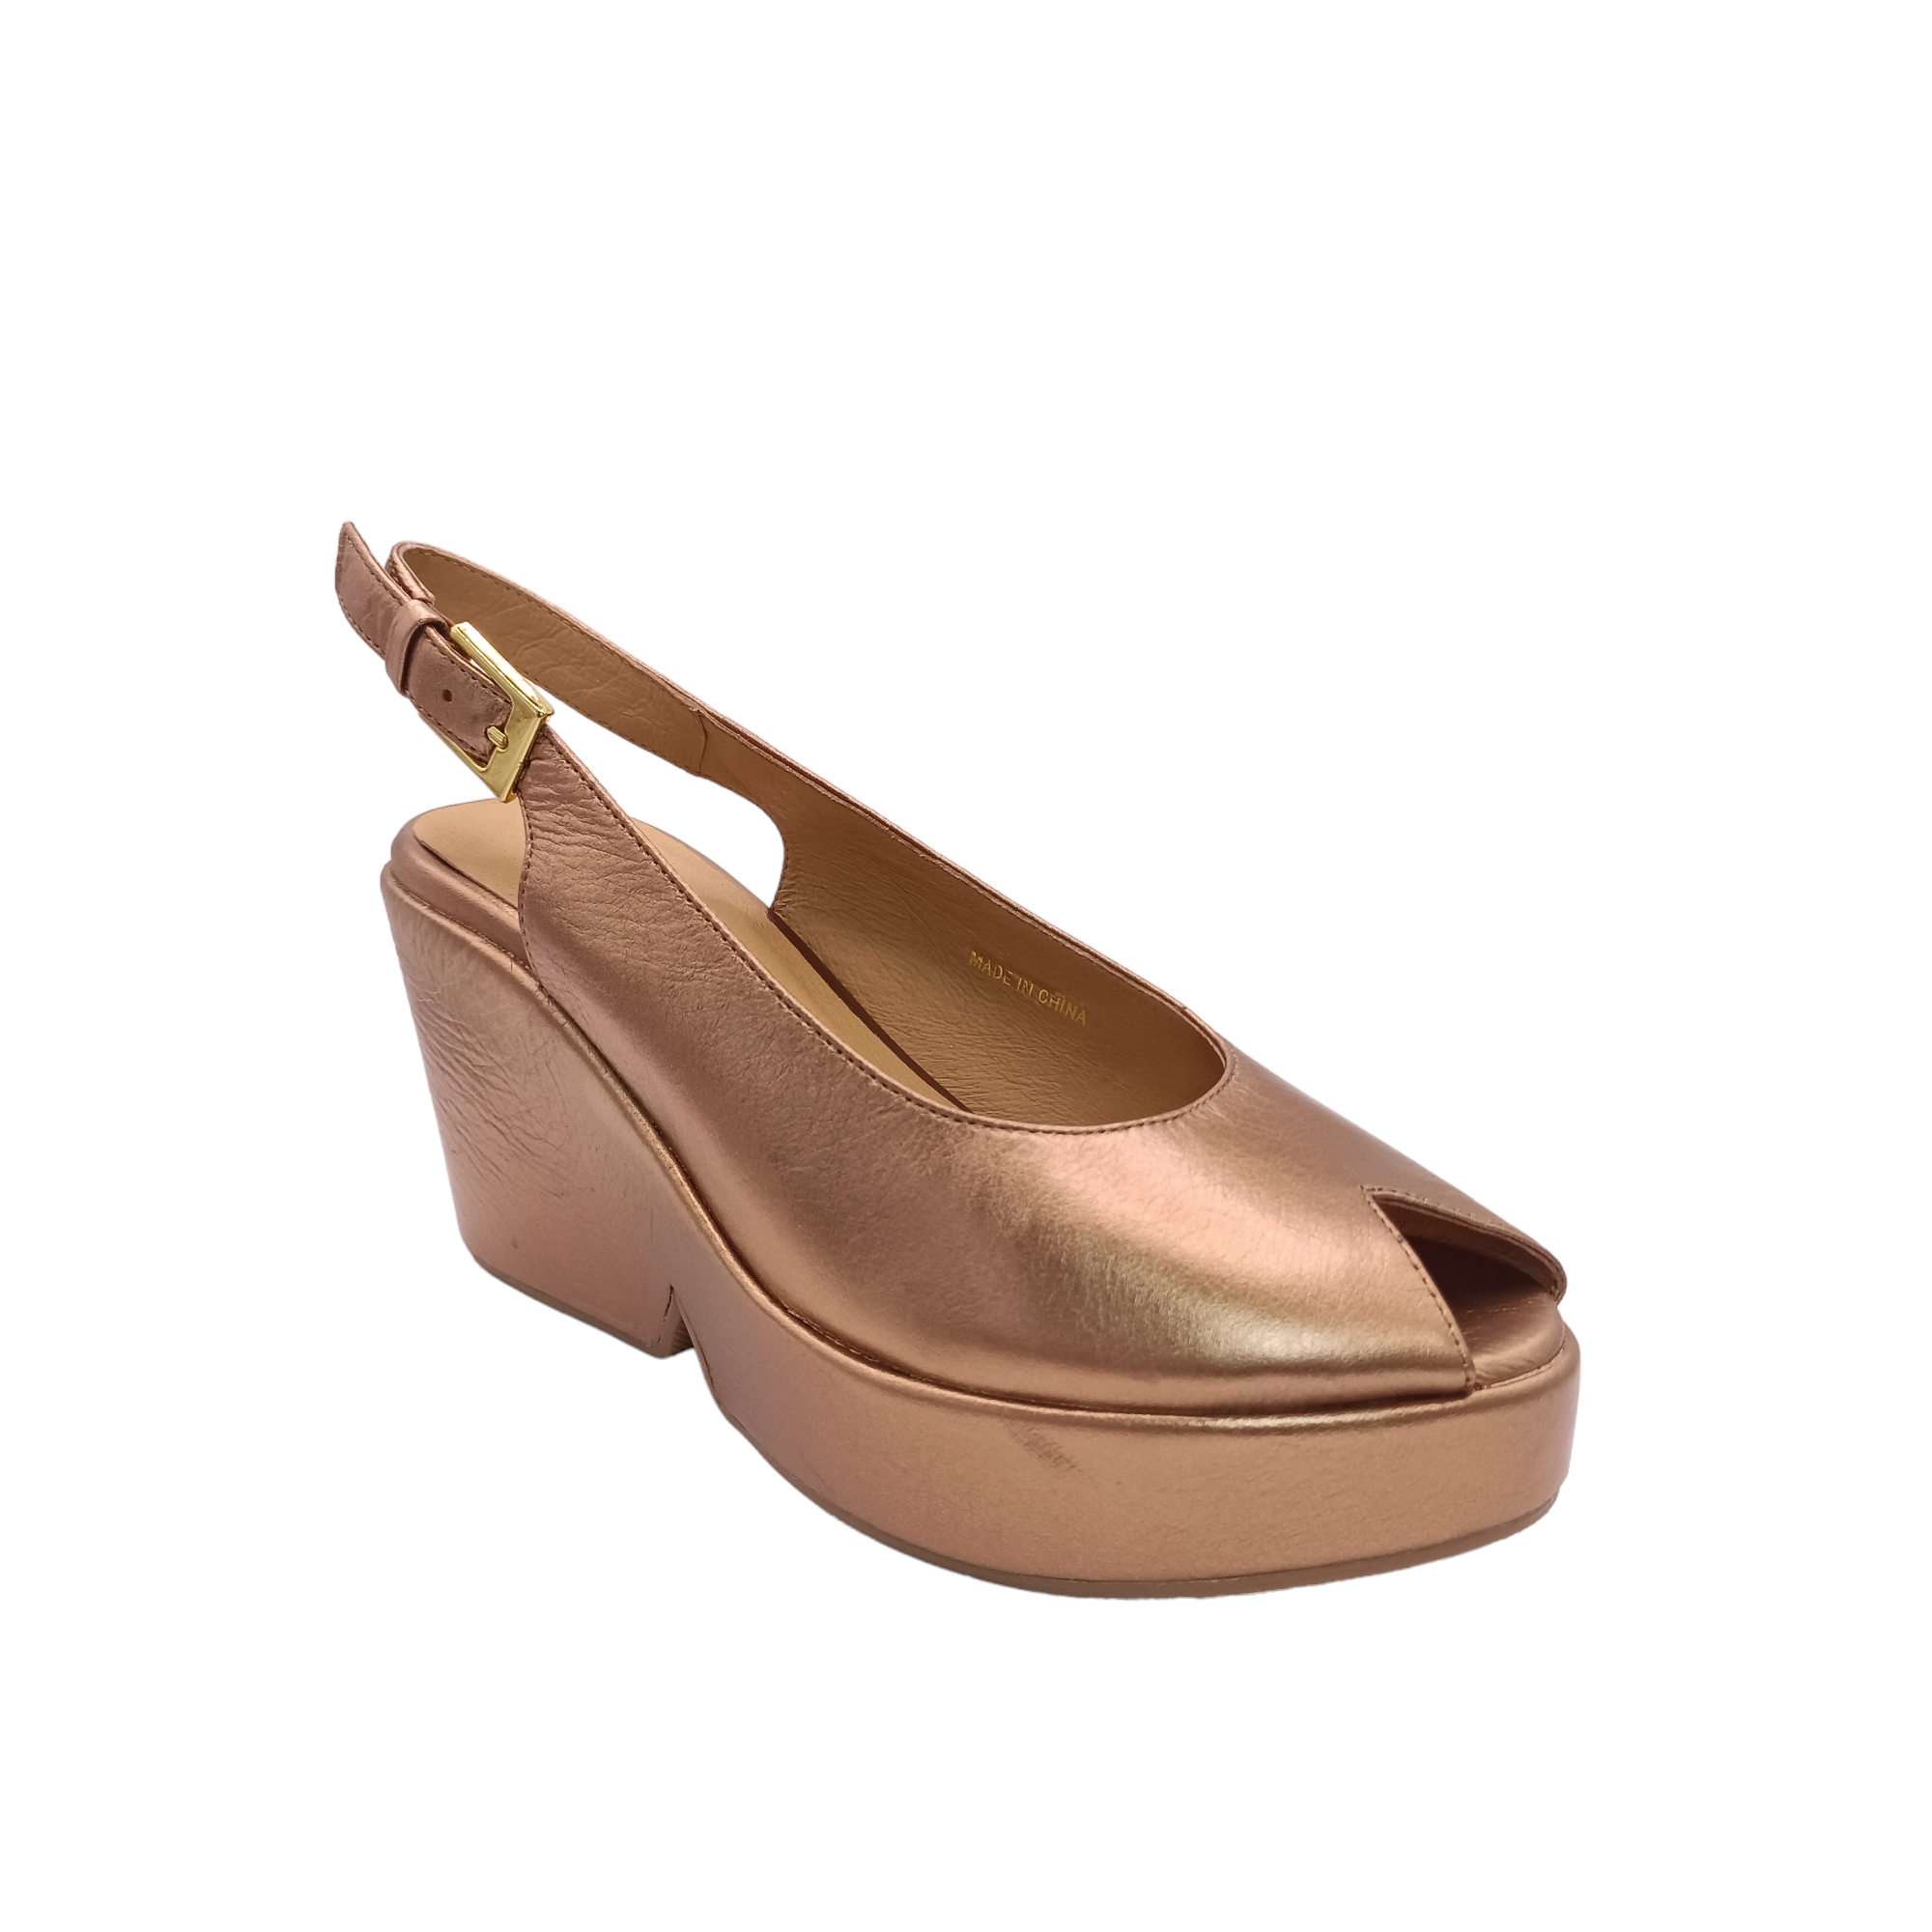 Believer - shoe&amp;me - Tamara - Wedges - Platform, Sandals, Summer, Wedges, Womens